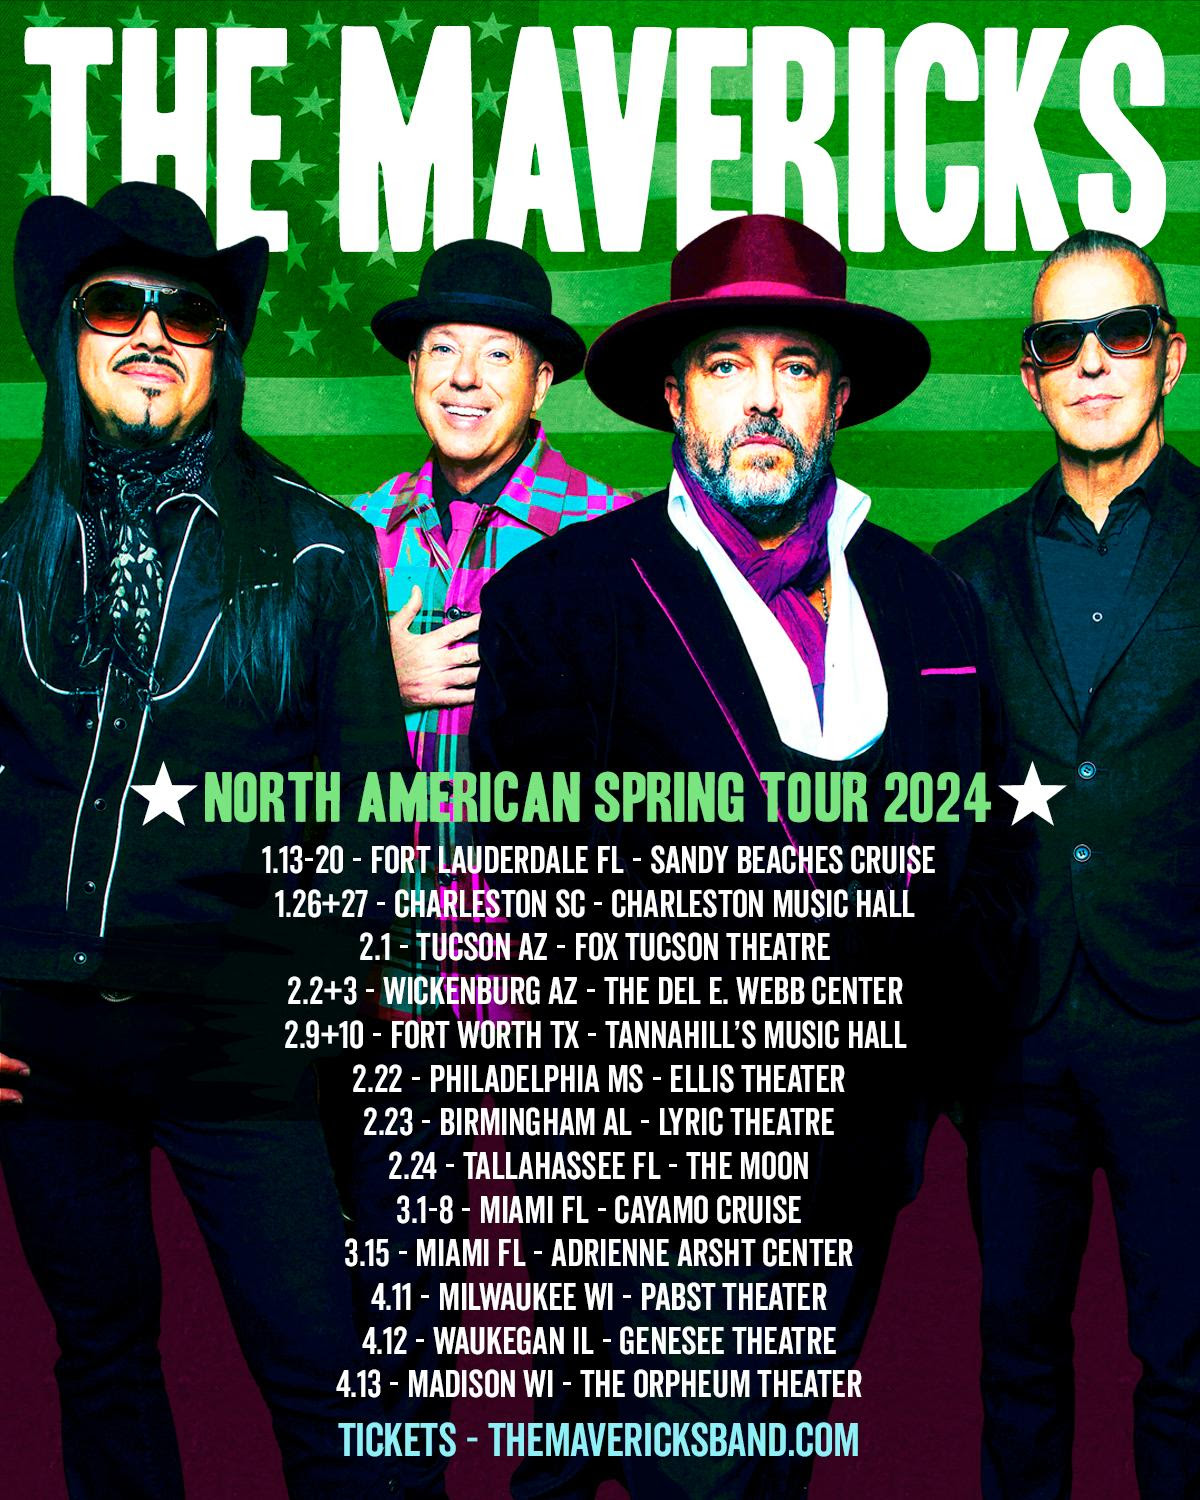 THE MAVERICKS Announce 2024 North American Tour